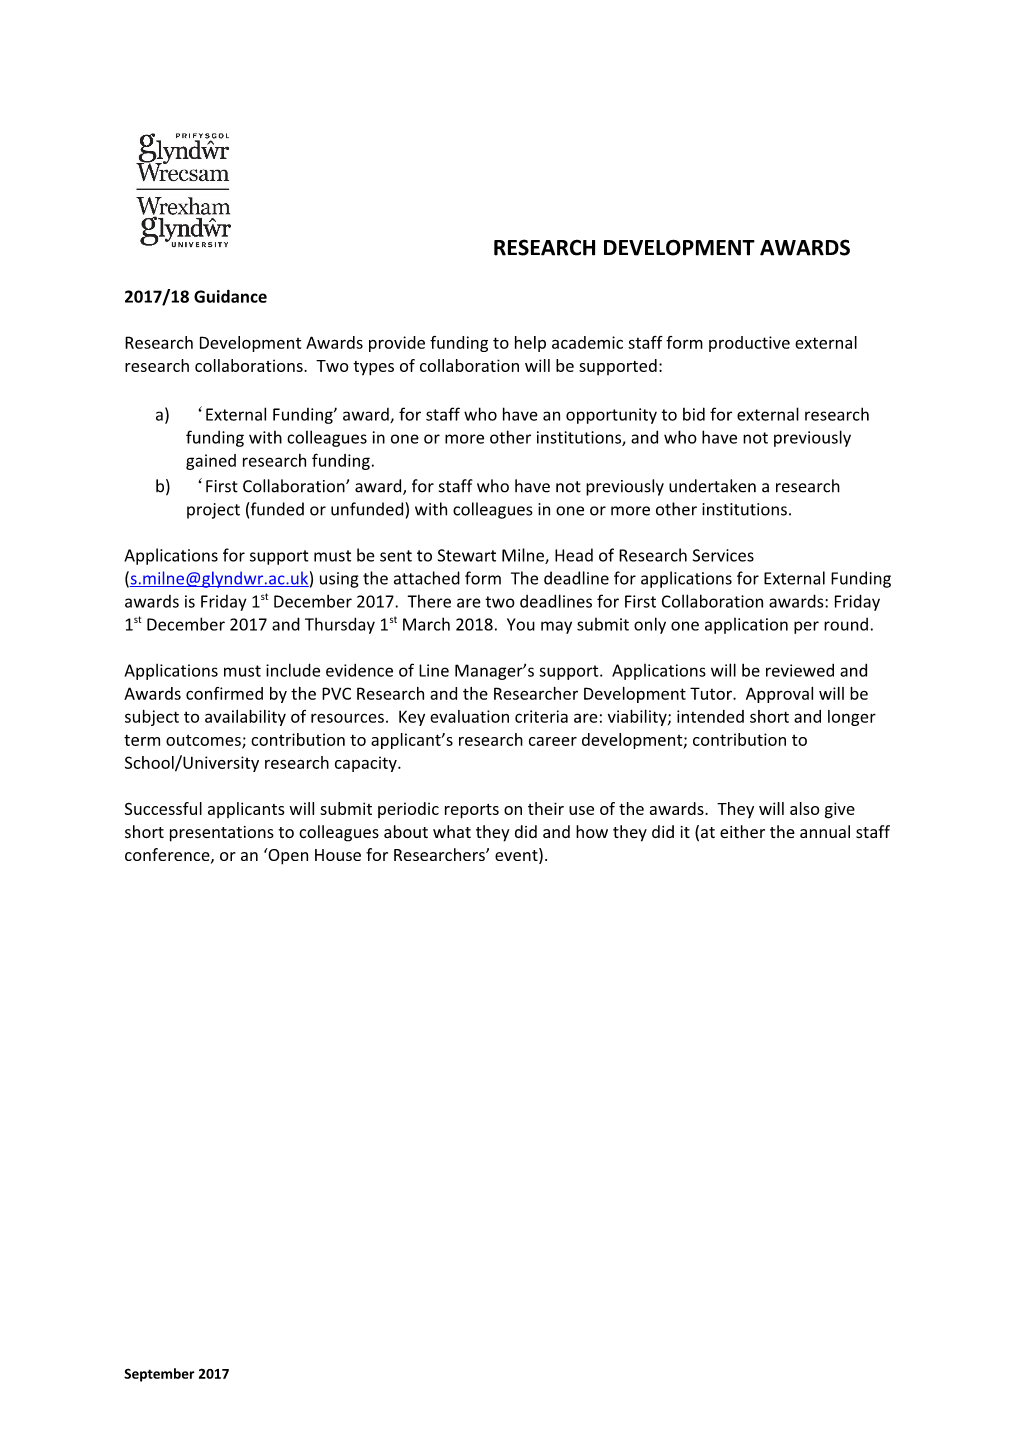 Research Development Awards